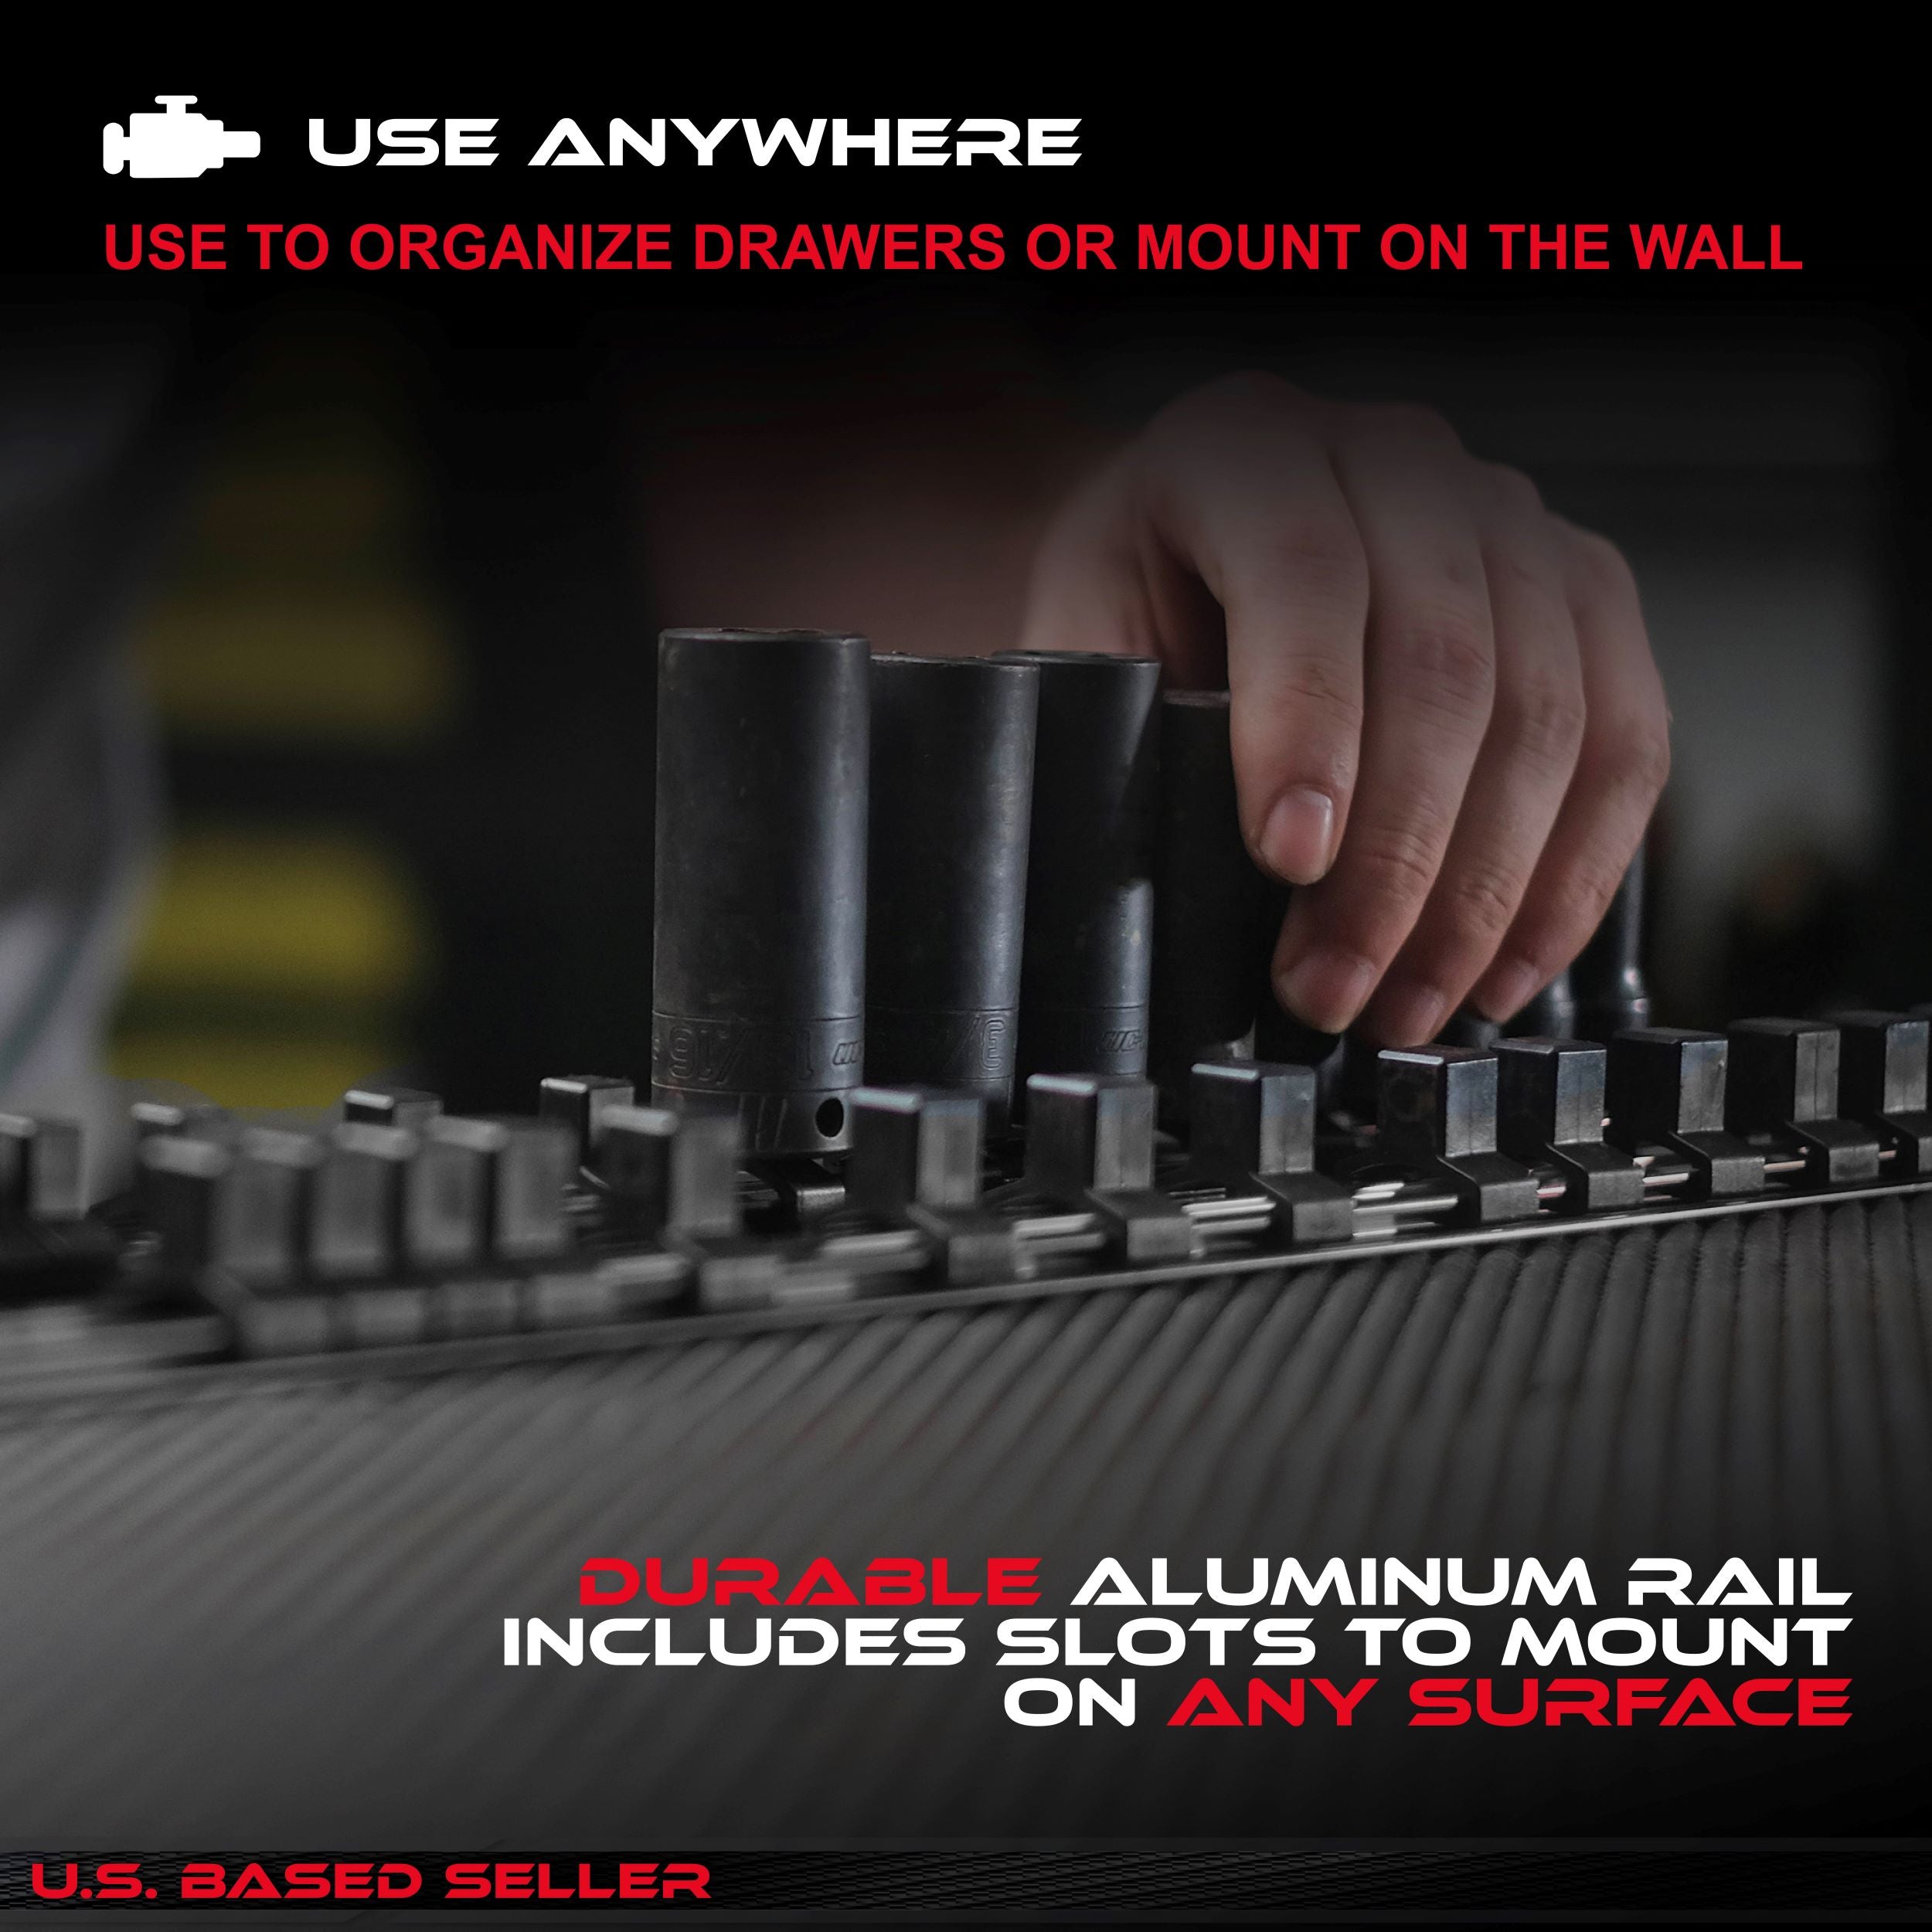 Black Aluminum SAE Socket Holder Rail & Clips 3pc Set 1/4” 3/8” 1/2"